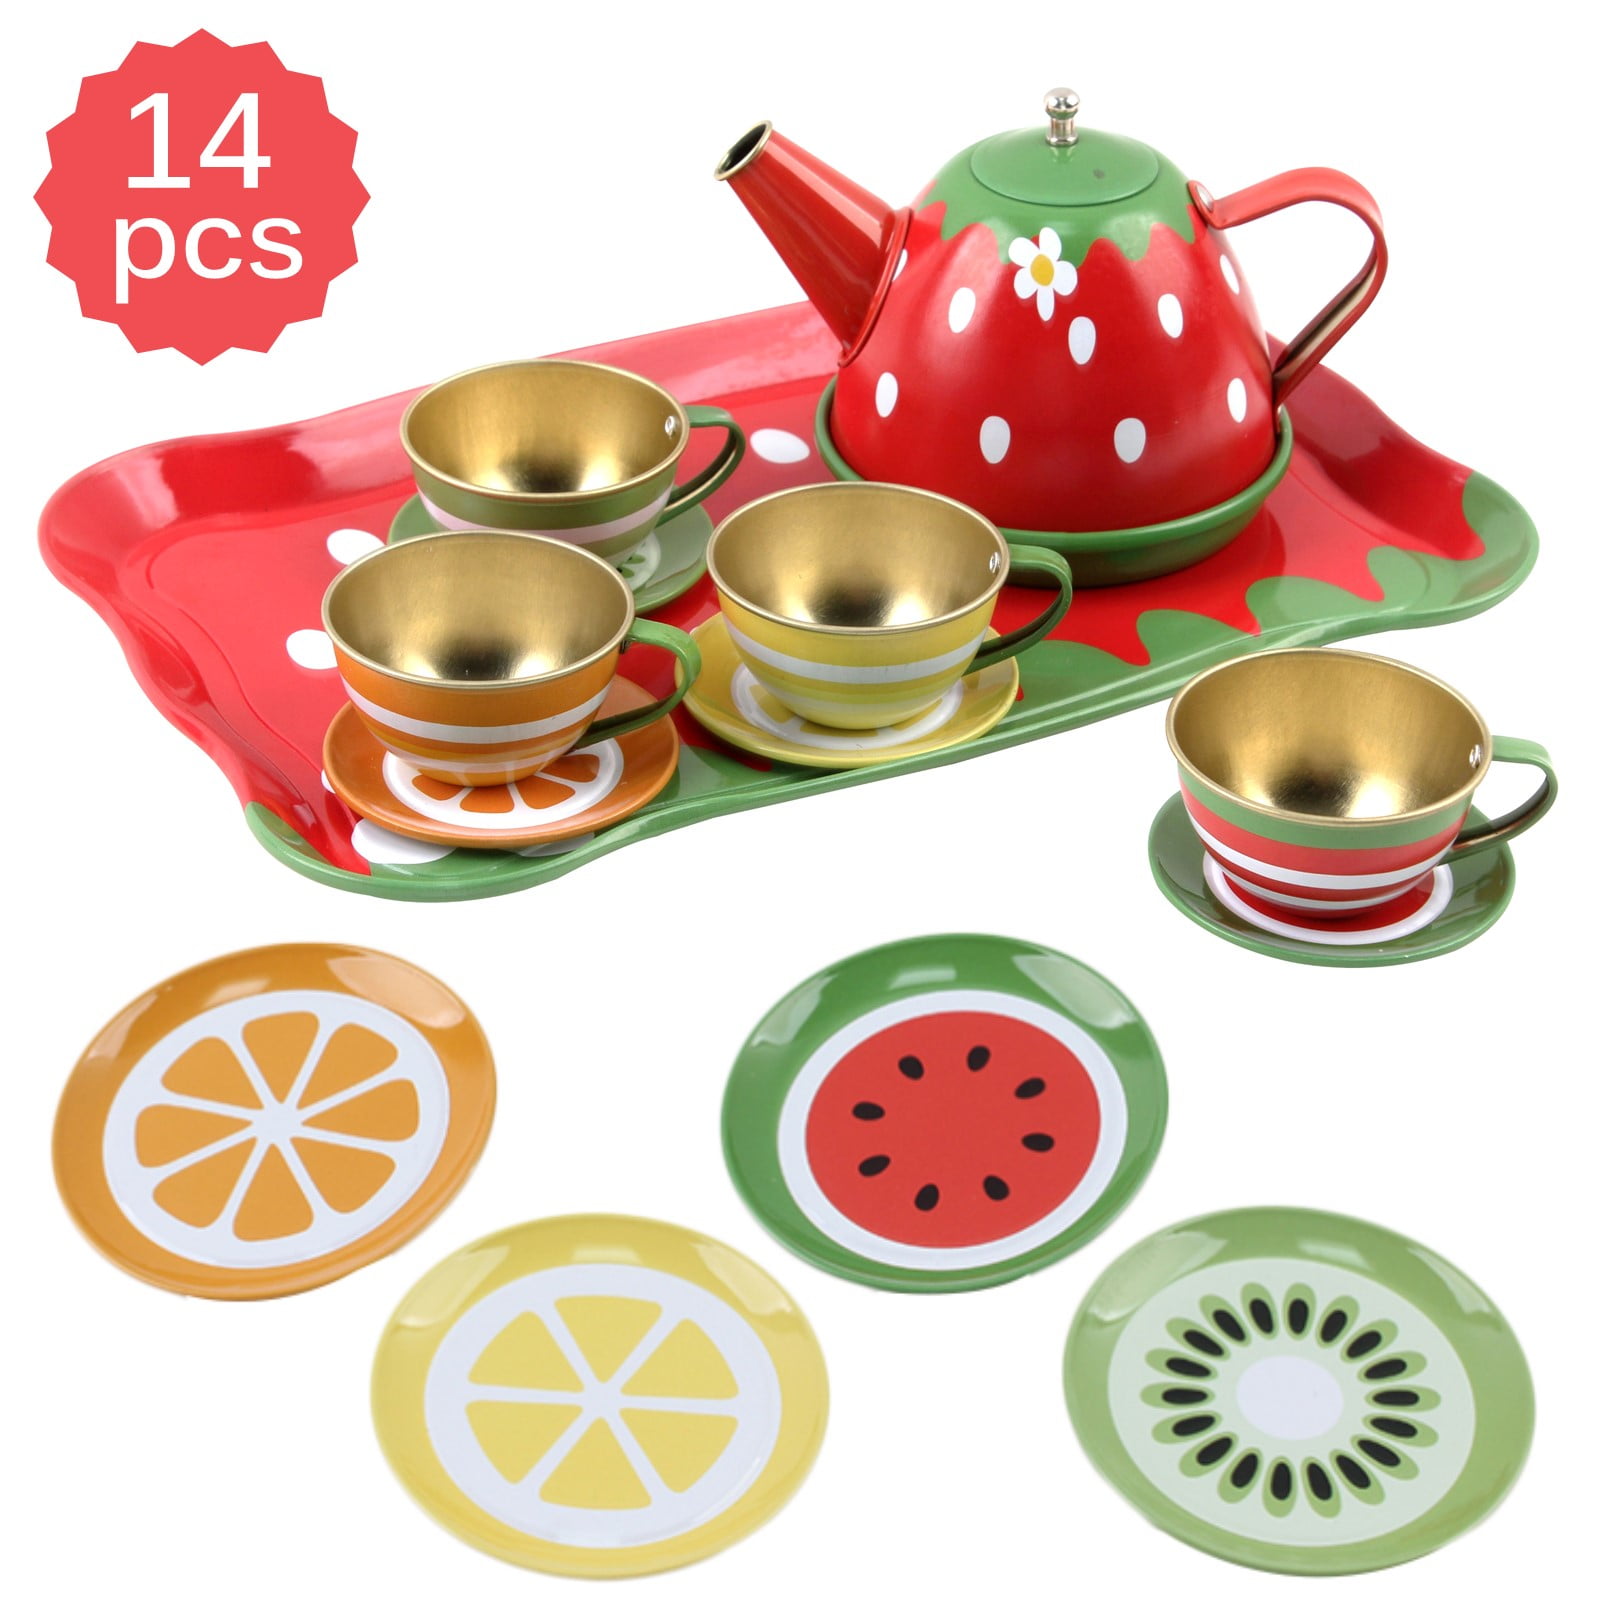 Flower Tin Tea Set 15pcs Pretend Role Play Toddler Cups Saucers Pot Tea Time 